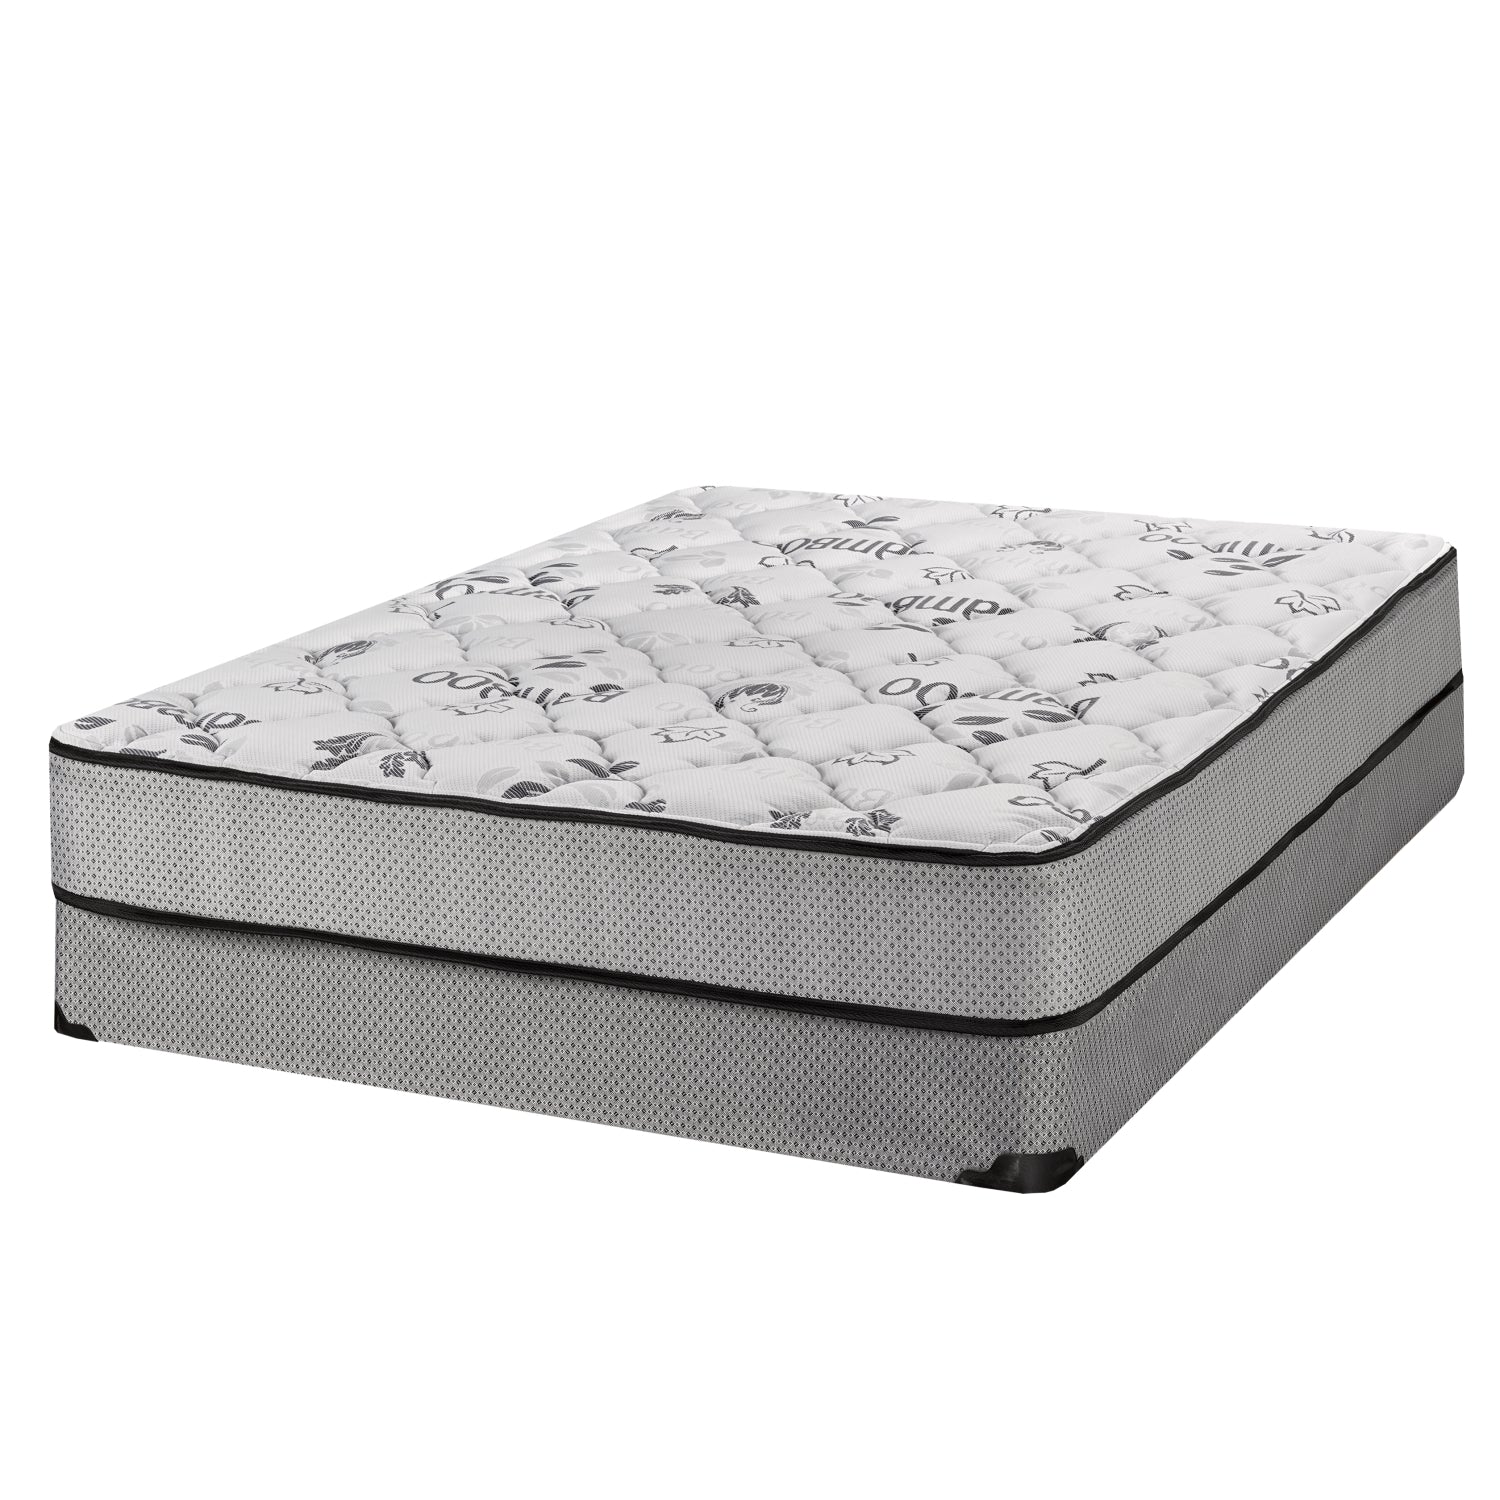 ViscoLogic Elite Plus 8-Inch Quilted Top Cooling Gel-Infused Memory Foam Mattress, CertiPUR-US® Certified Foam